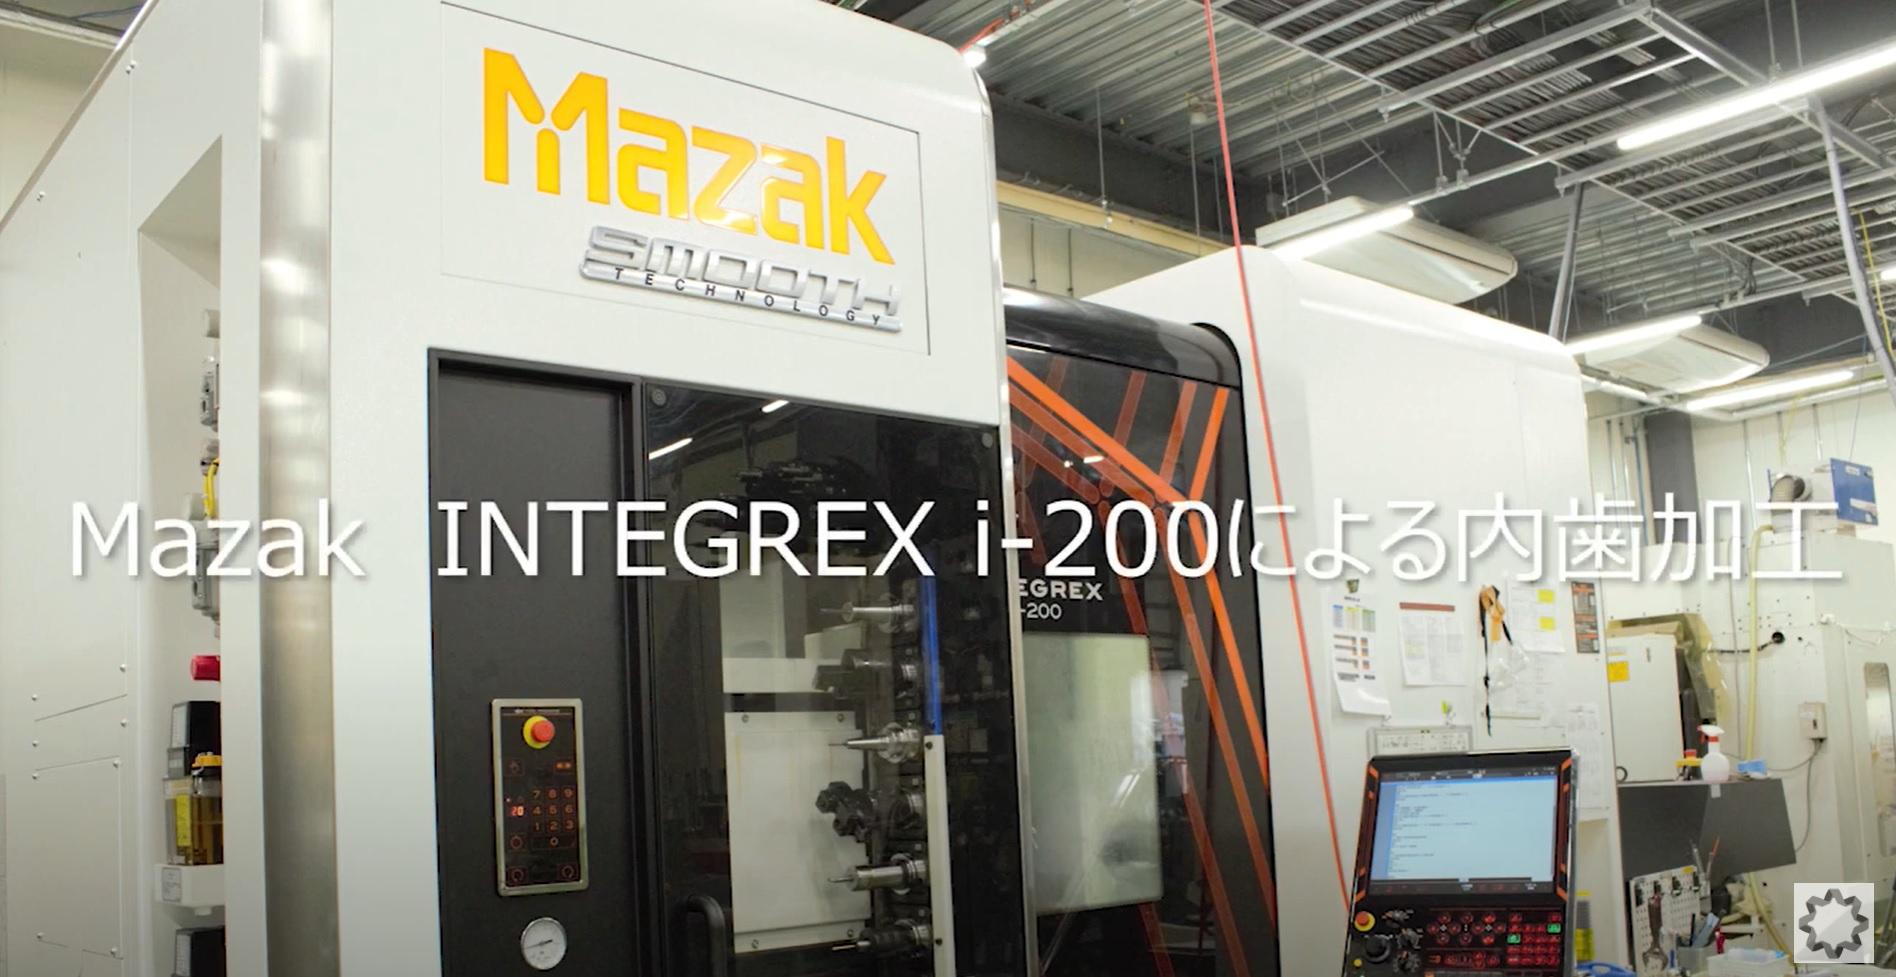 You Tubeチャンネル vol.2  『Mazak Integrex i-200 による内歯加工』をアップ致しました